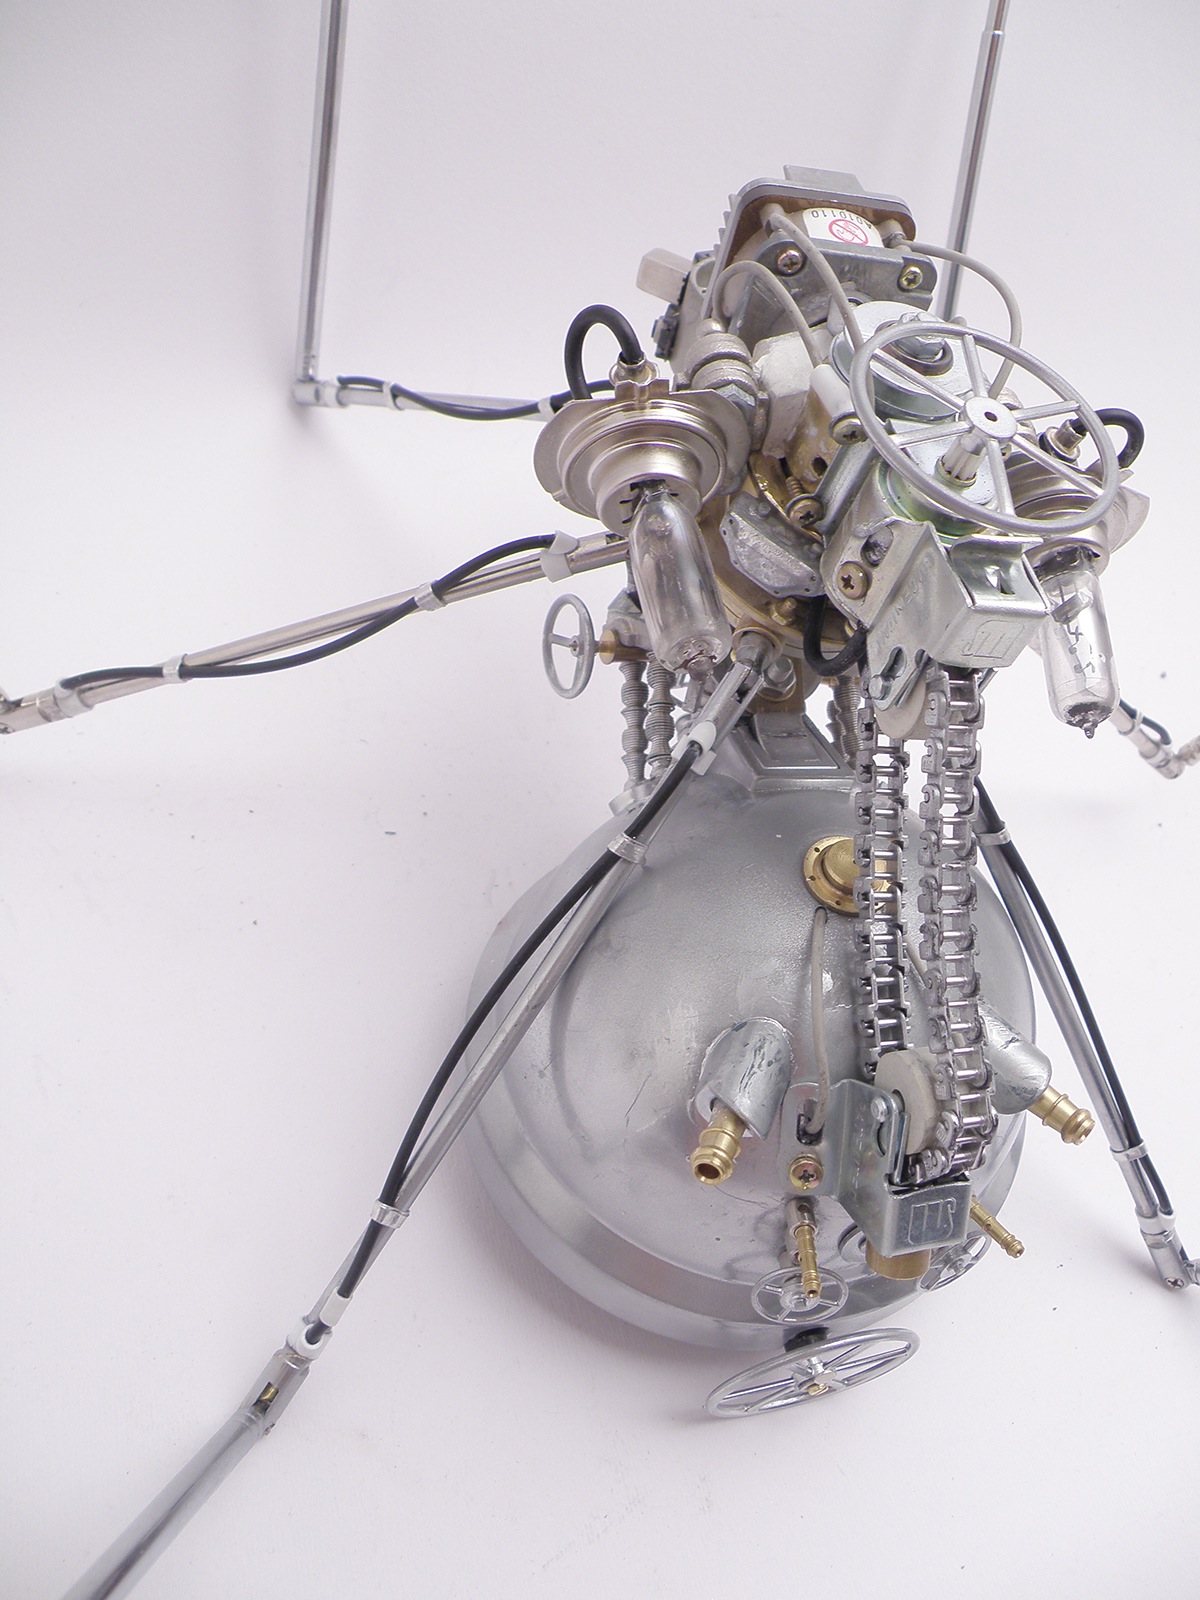 Wired magazine Kallamity Luca Zampriolo robots mechs design spider sculpture kitbash concept design